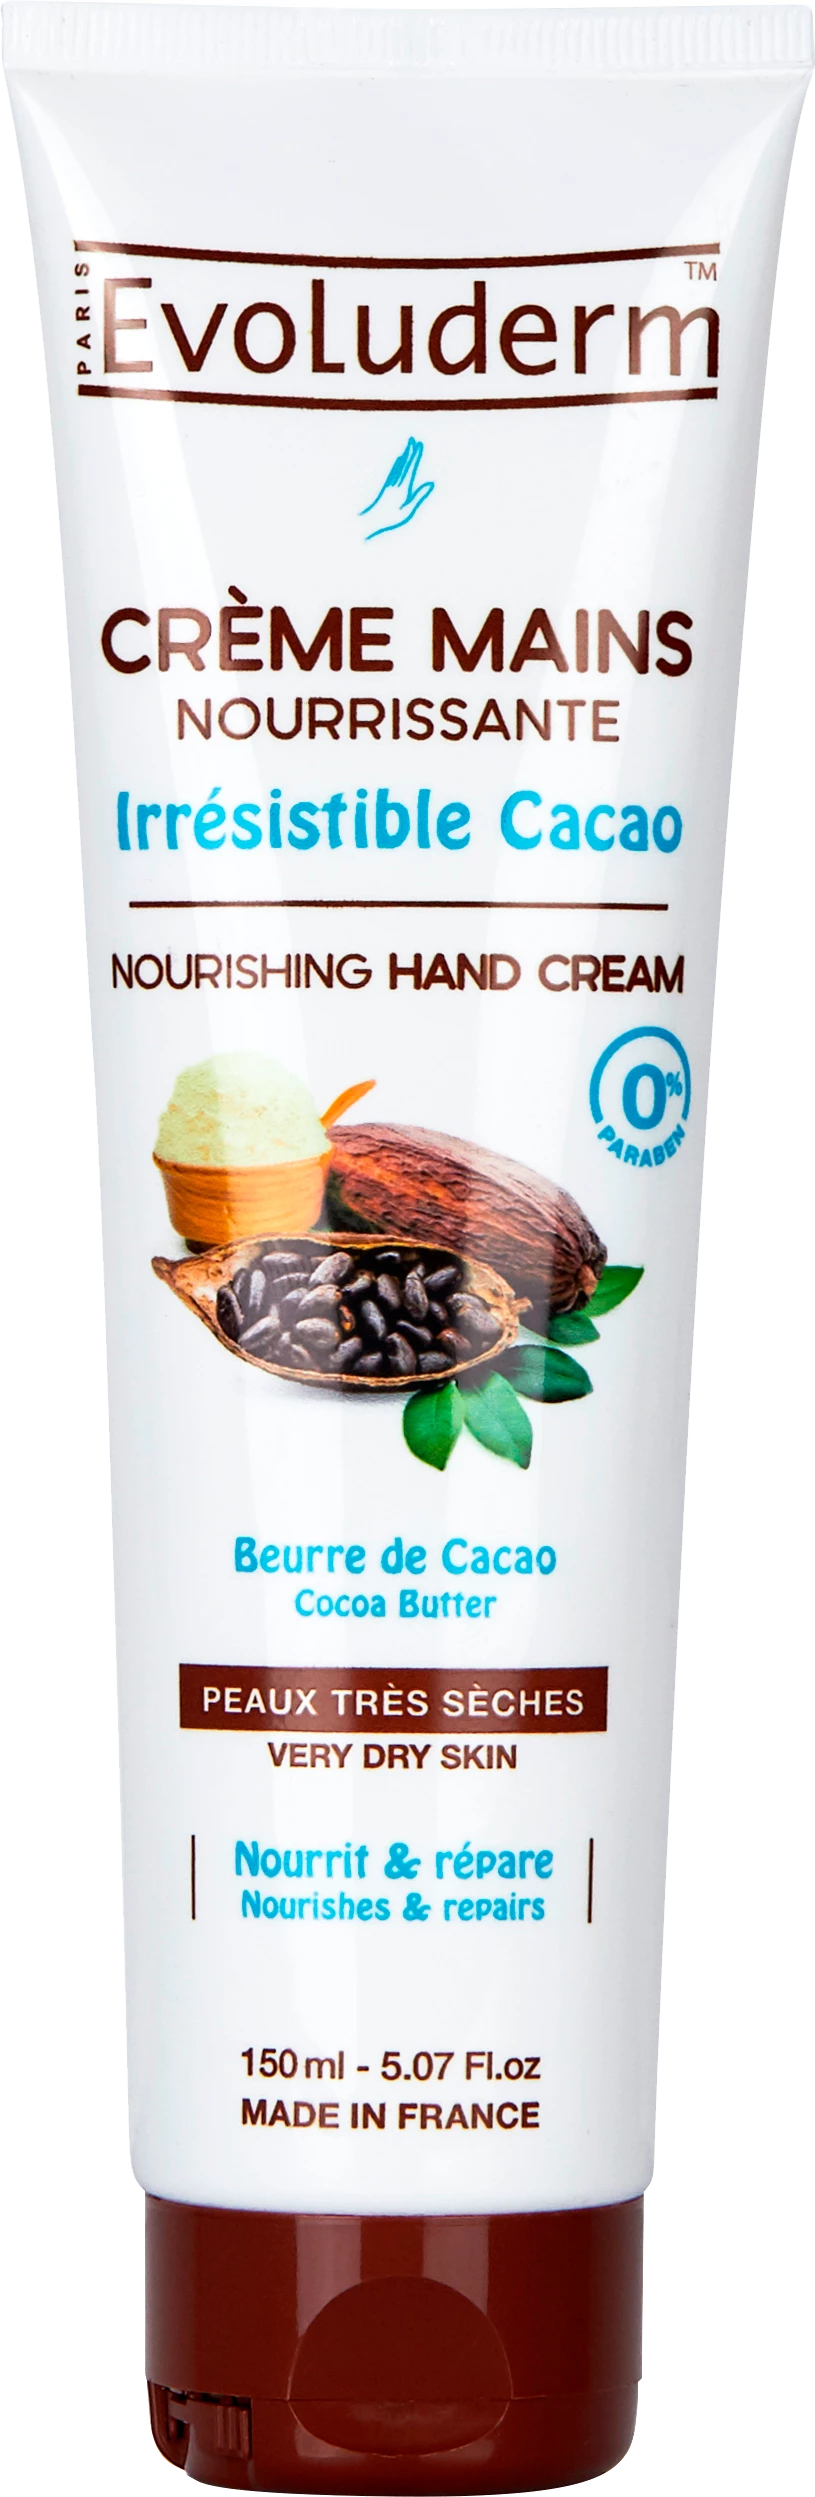 Crème Mains Irrésistible Cacao, 150ml - EVOLUDERM